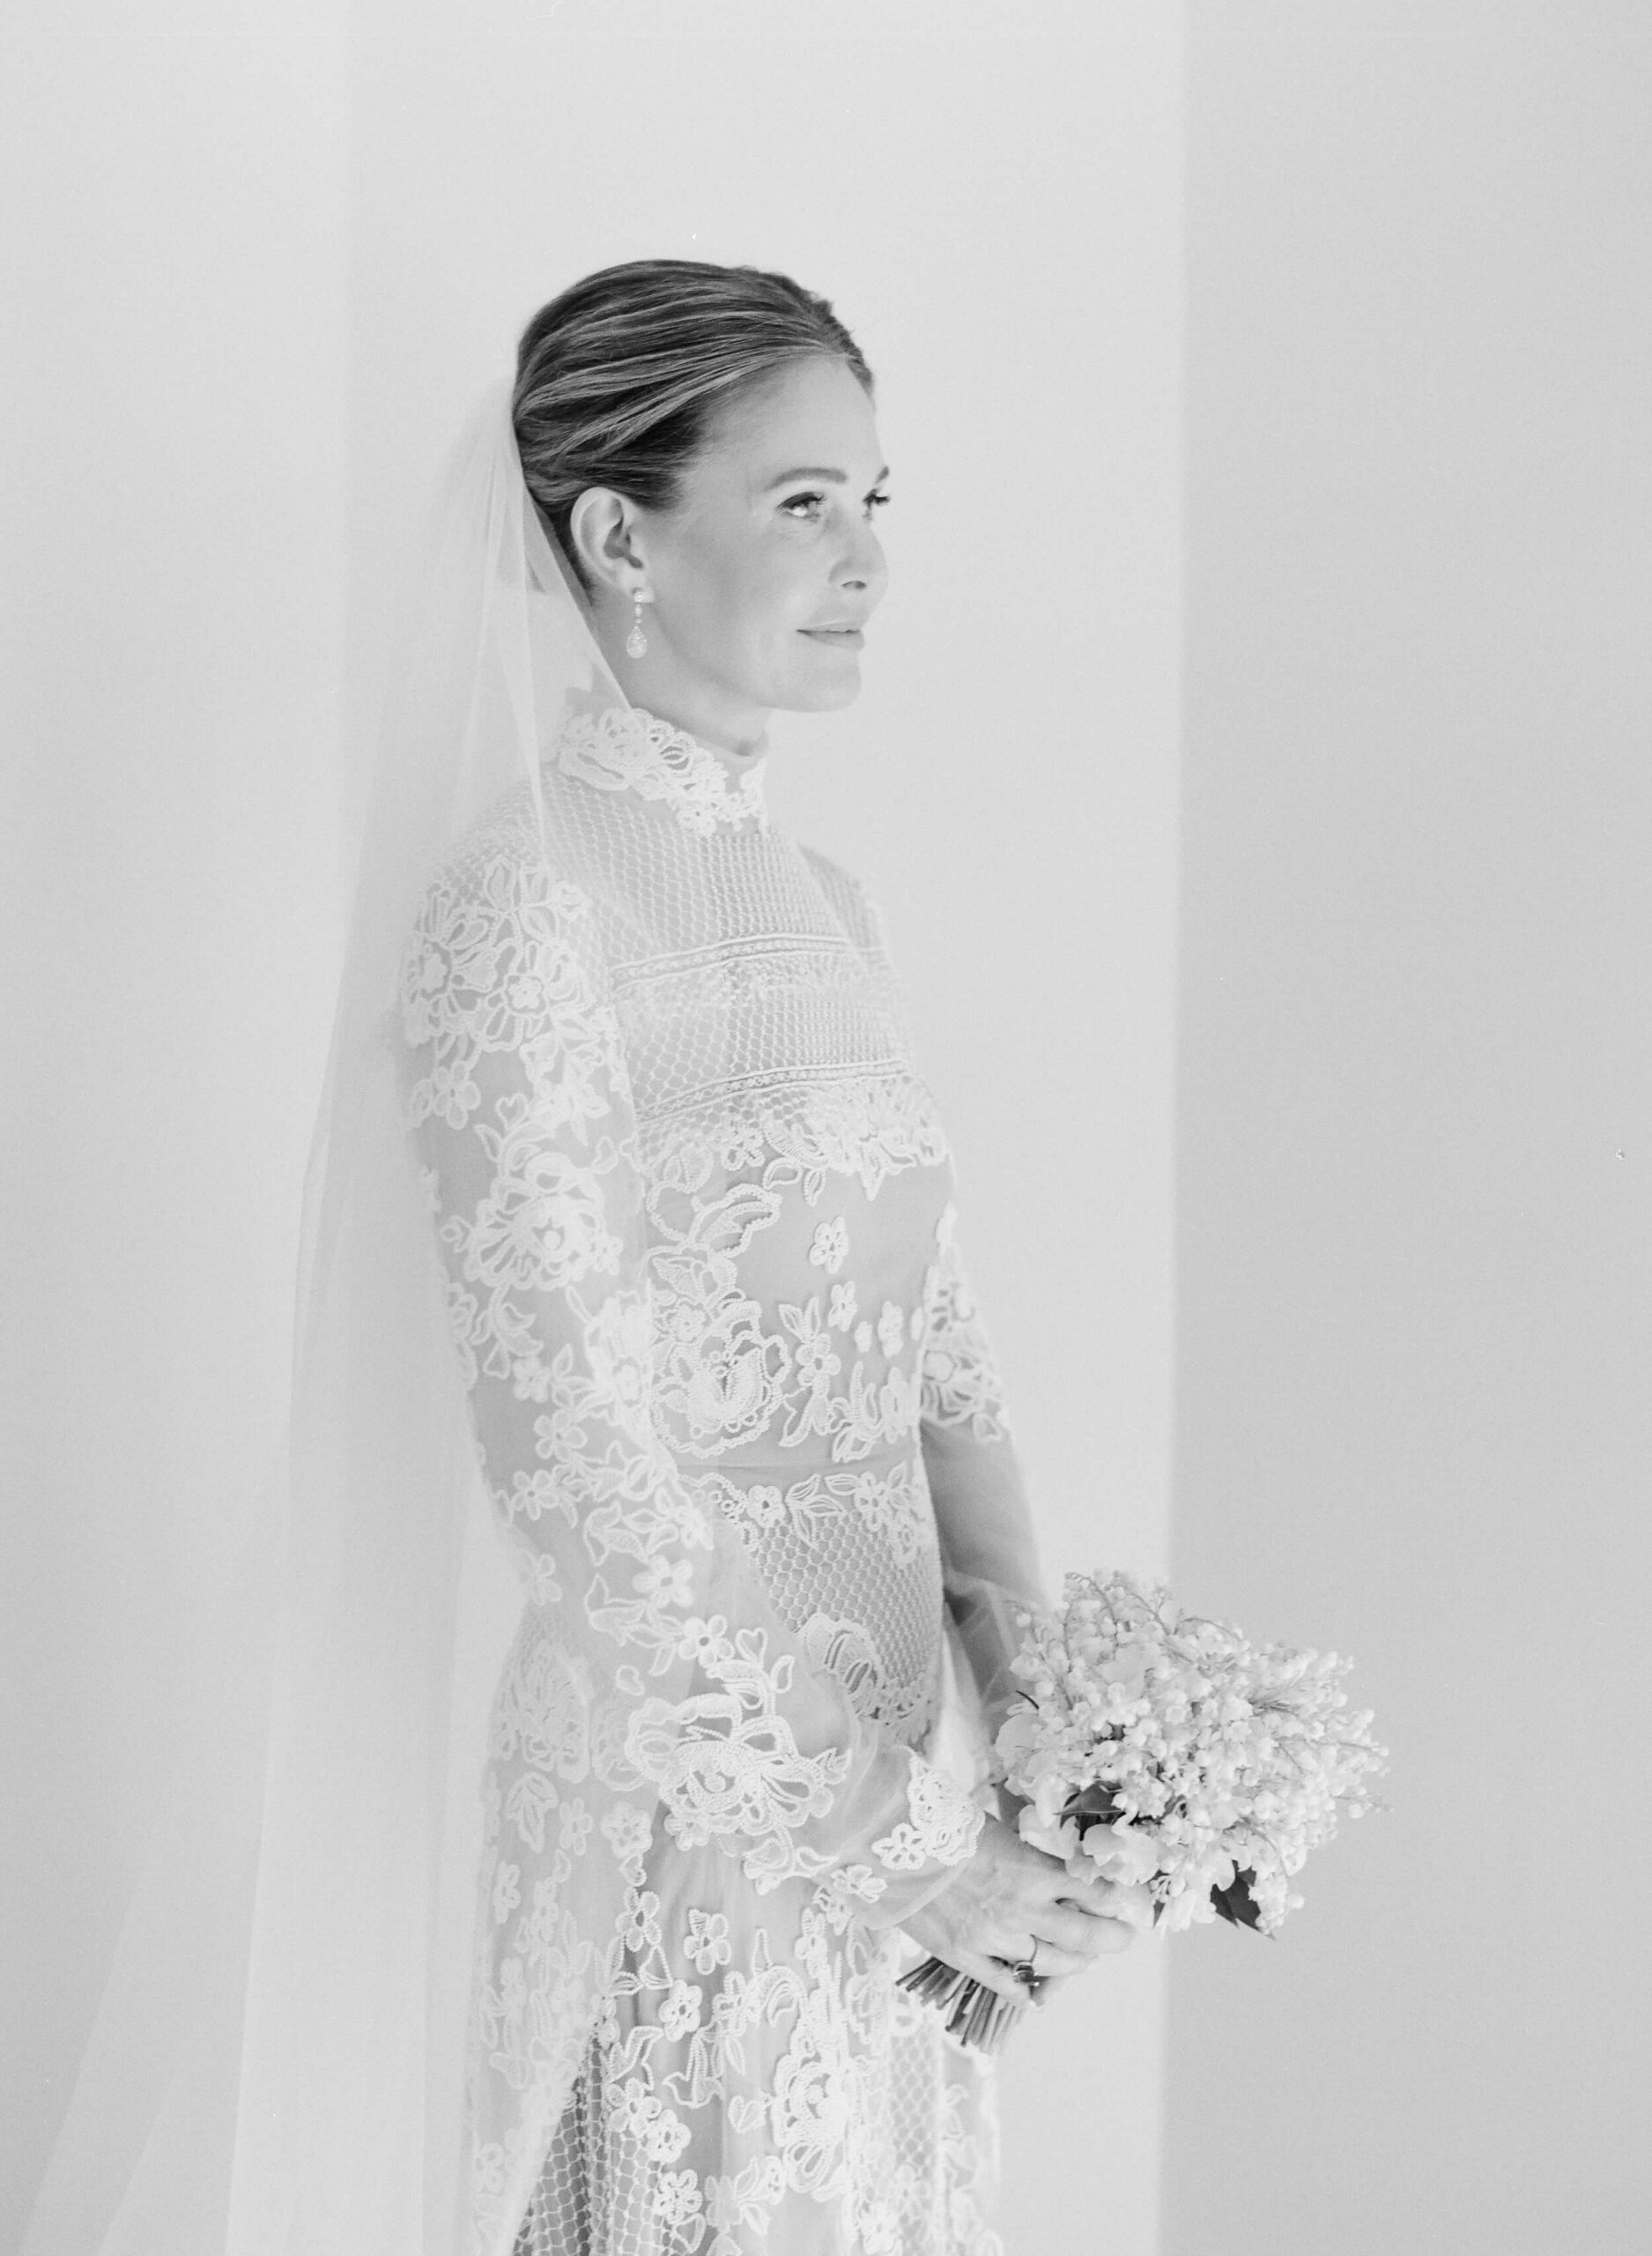 Abigail in her wedding dress, holding her bouquet